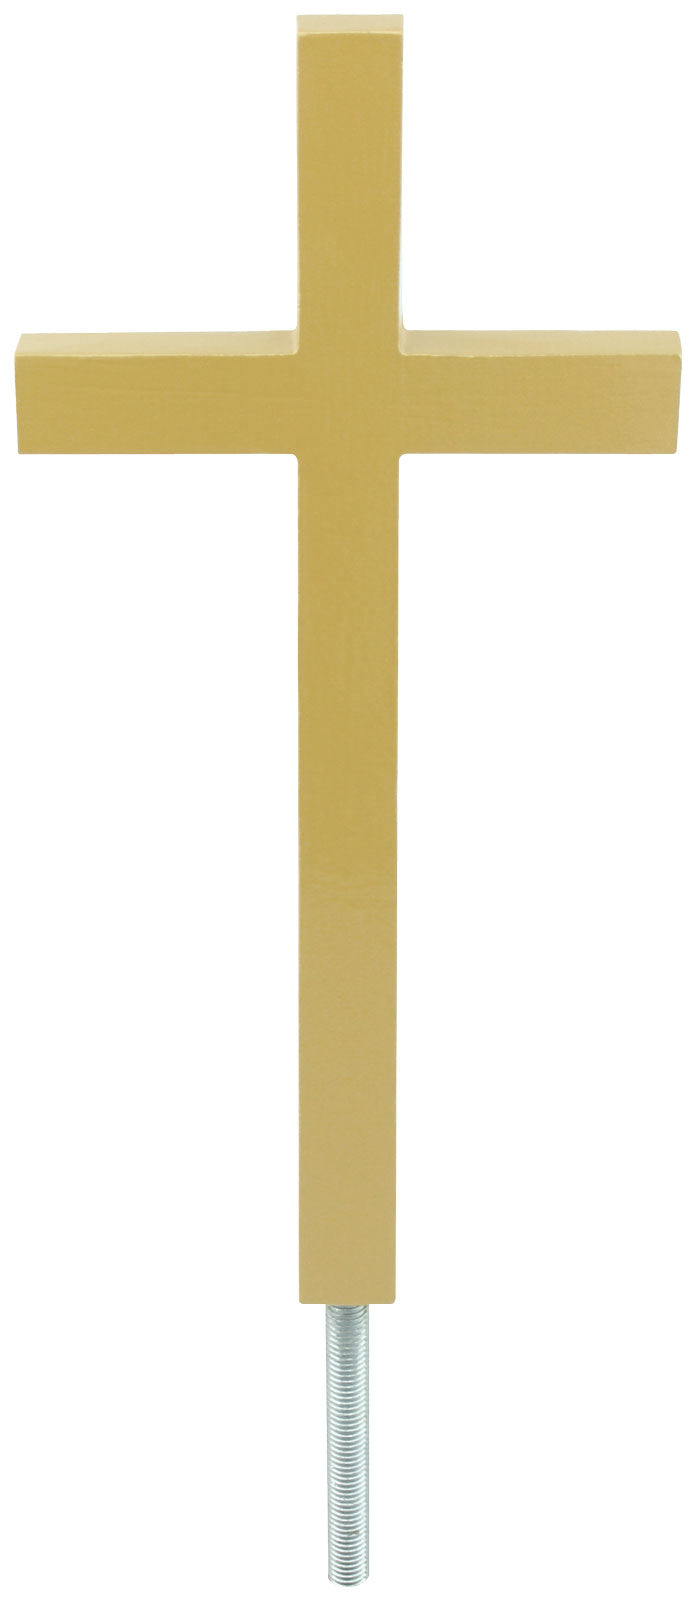 Gold Painted Aluminum Plain Cross Flagpole Ornament - 1/2